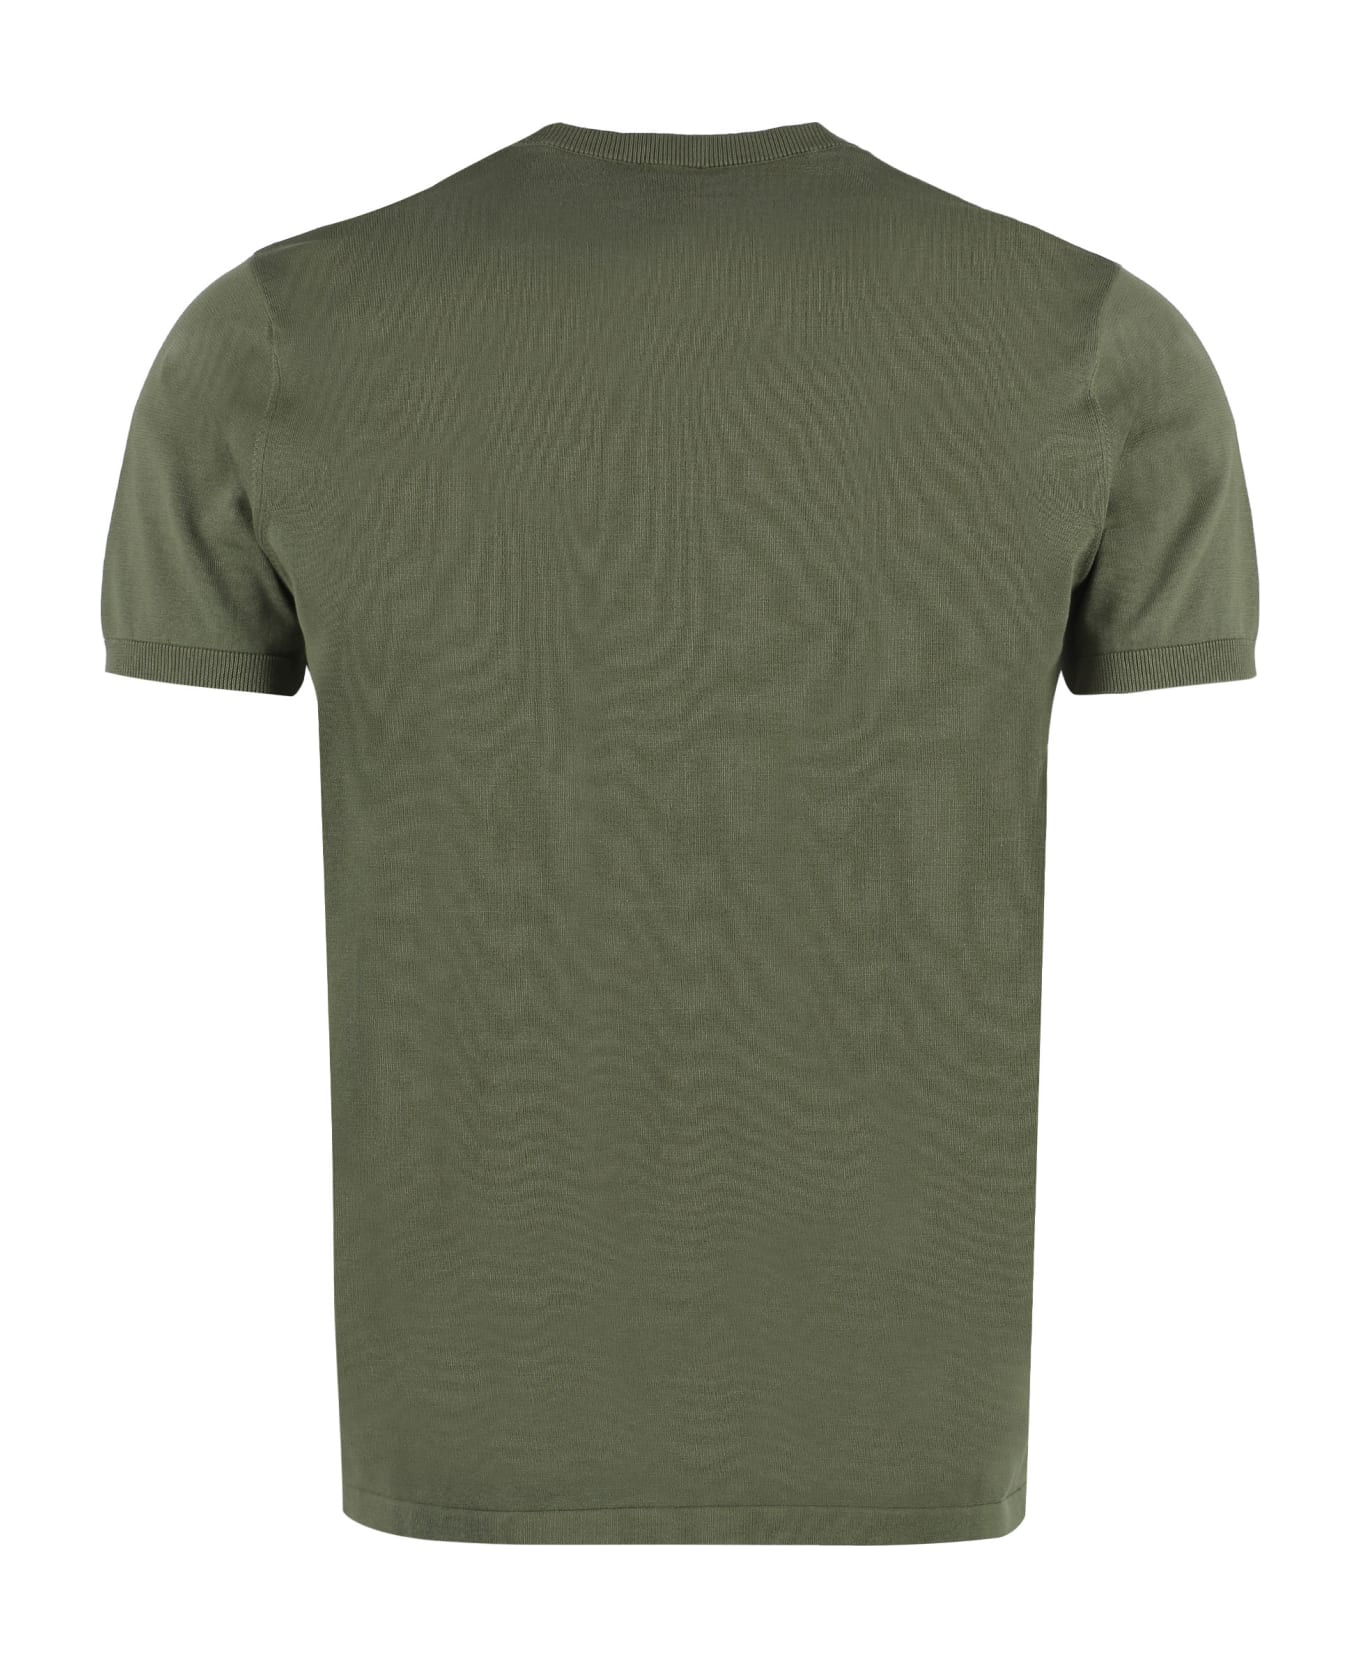 Aspesi Cotton Knit T-shirt - green シャツ